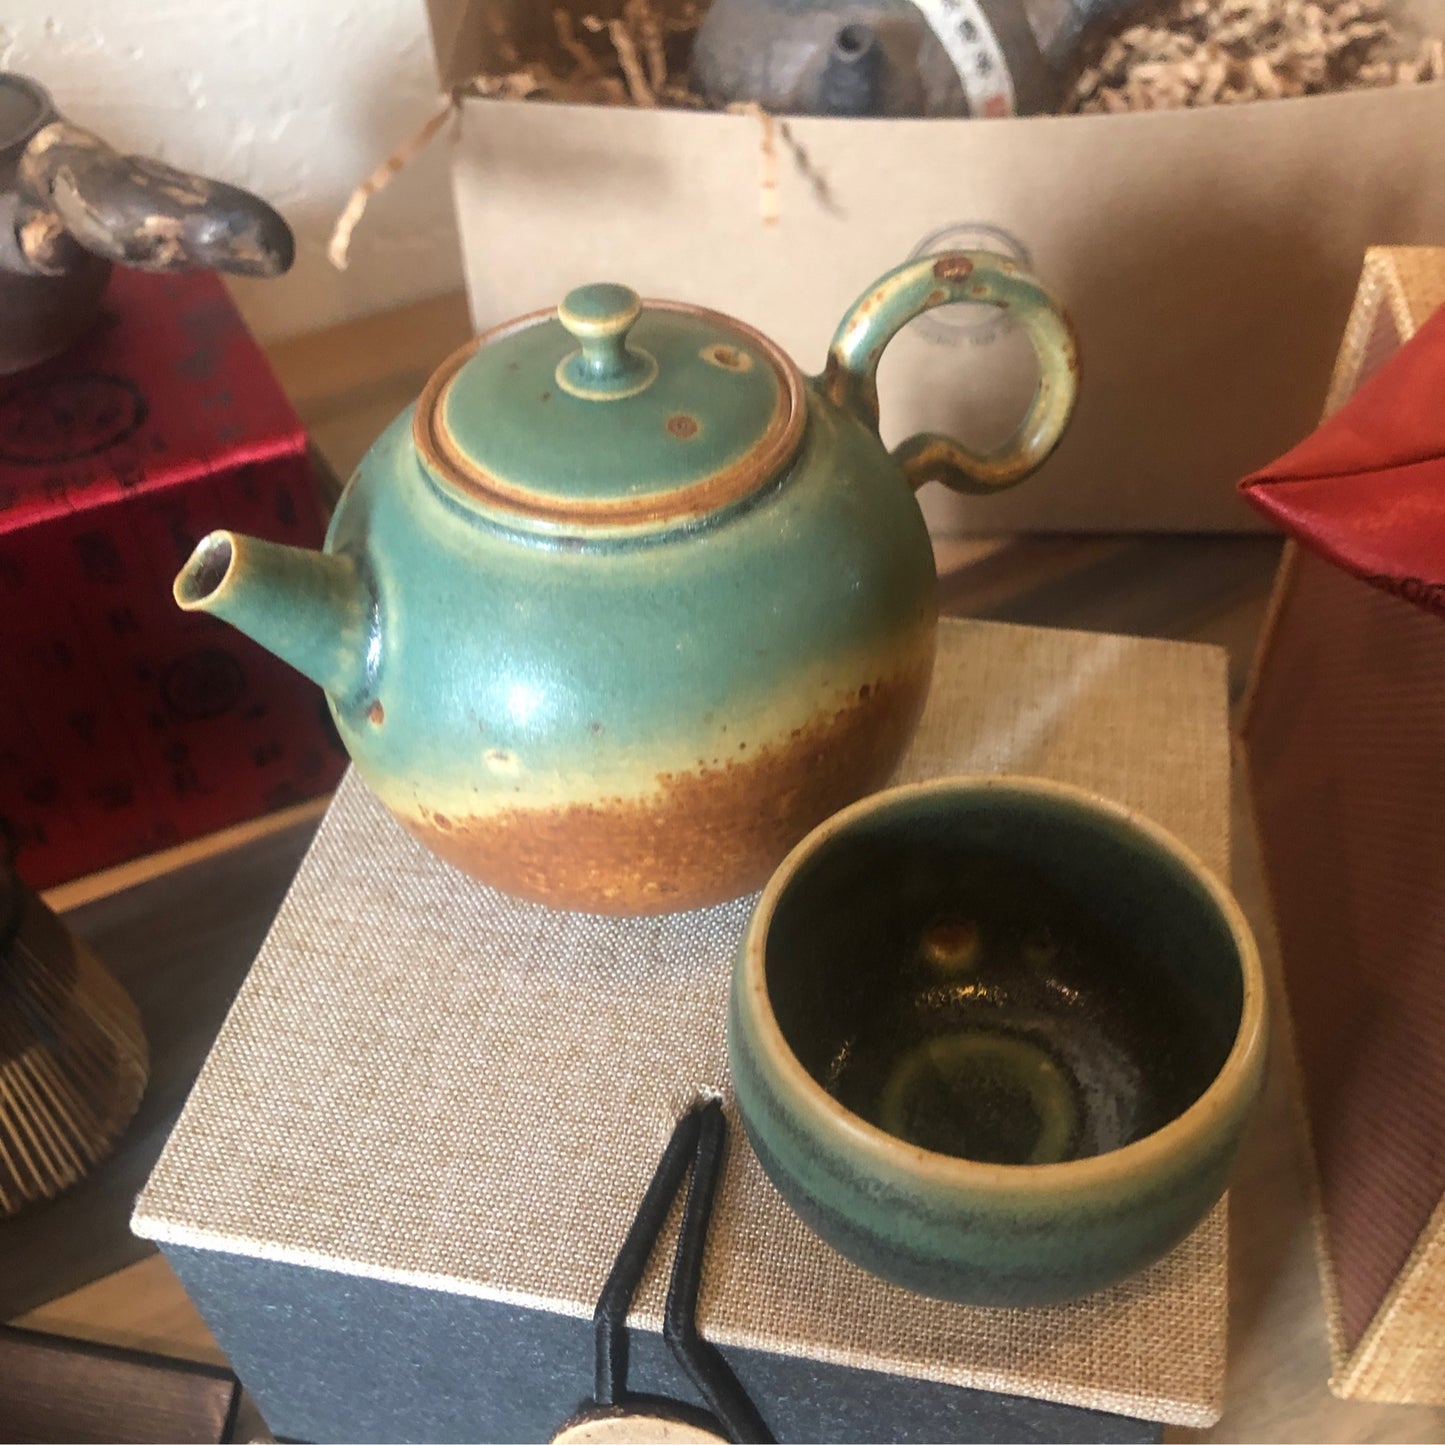 Fei Cui Glazed “Turquoise Desert” Bug Bitten Teapot And Cups